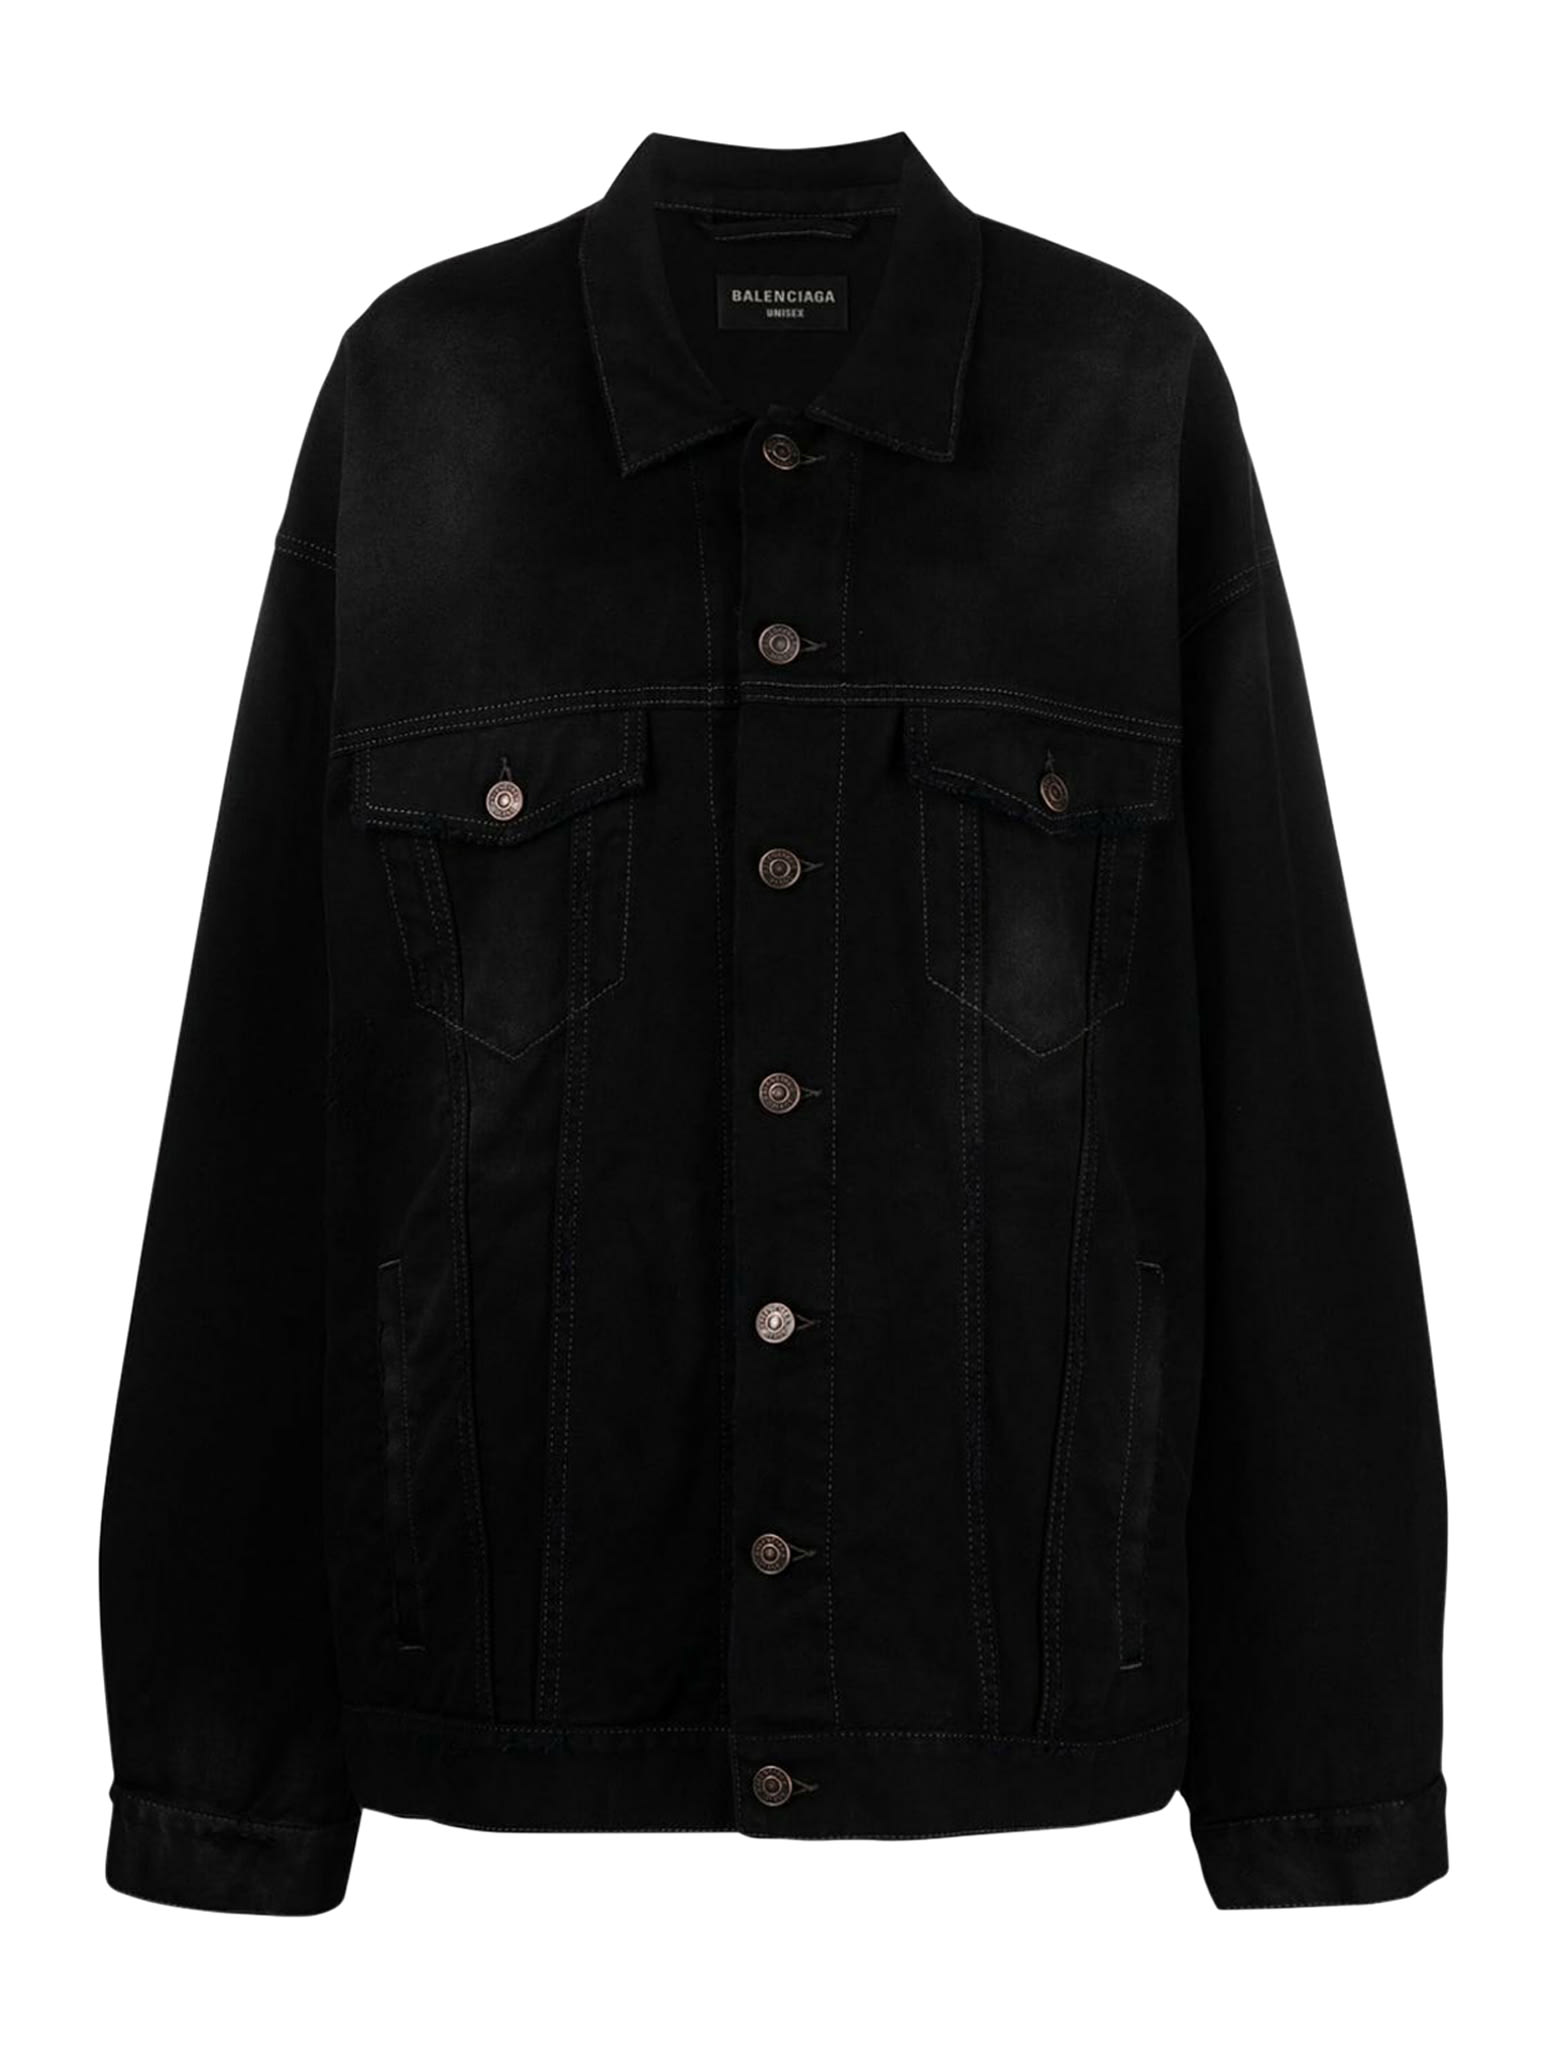 Balenciaga Oversized Jacket In Matte Black